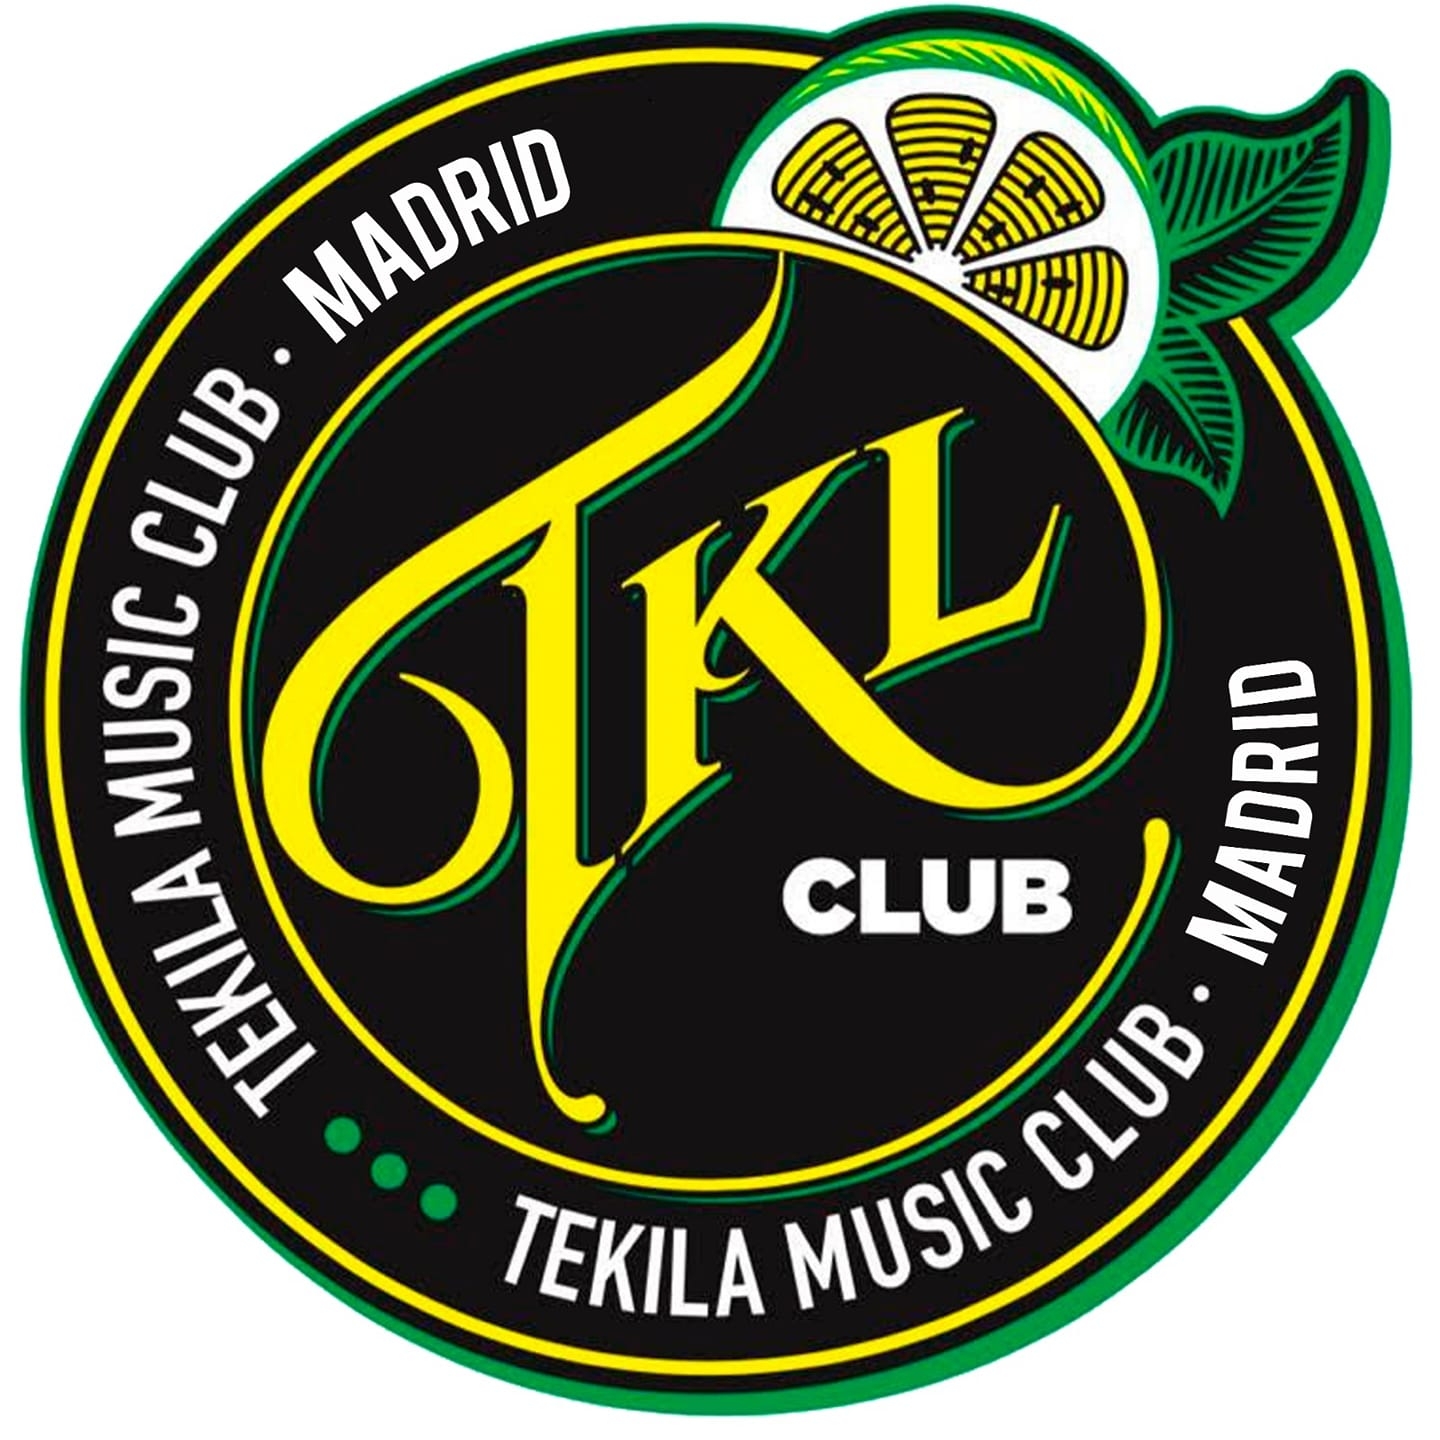 Tekila Music Club